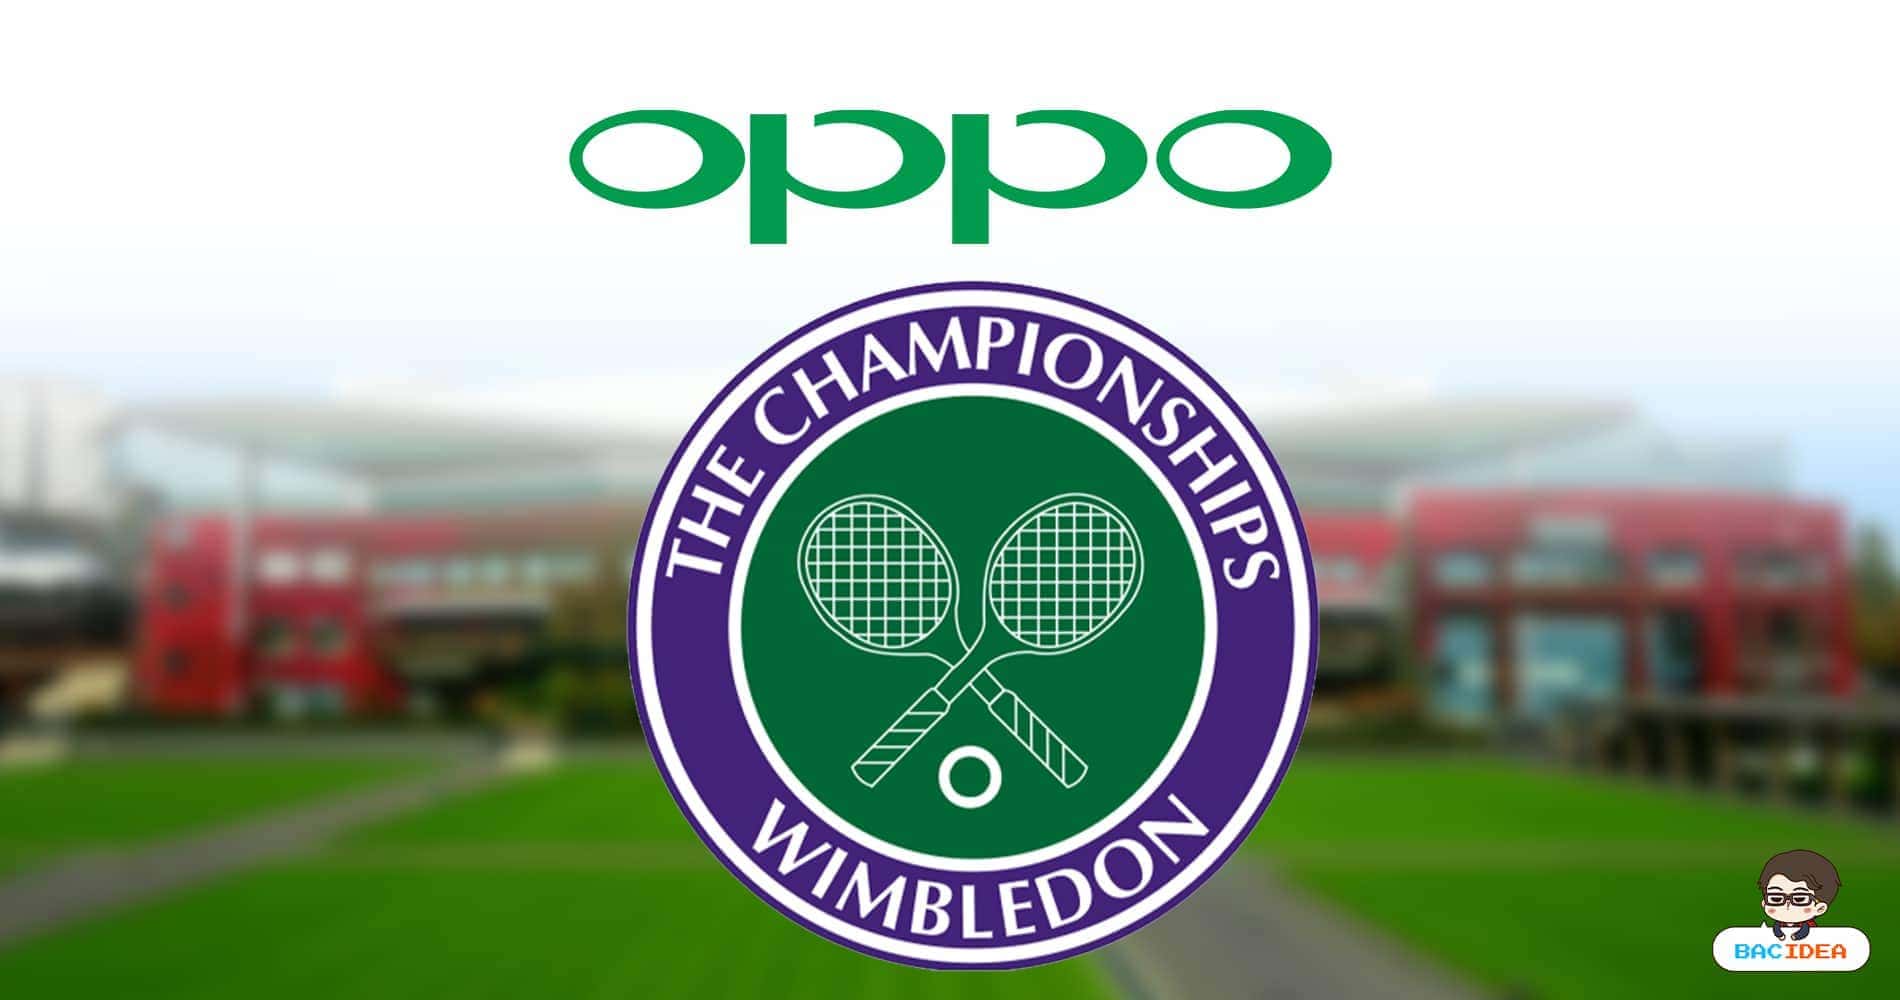 OPPO ประกาศเป็นพาร์ทเนอร์กับการแข่งขันเทนนิสวิมเบิลดันอย่างเป็นทางการ 1